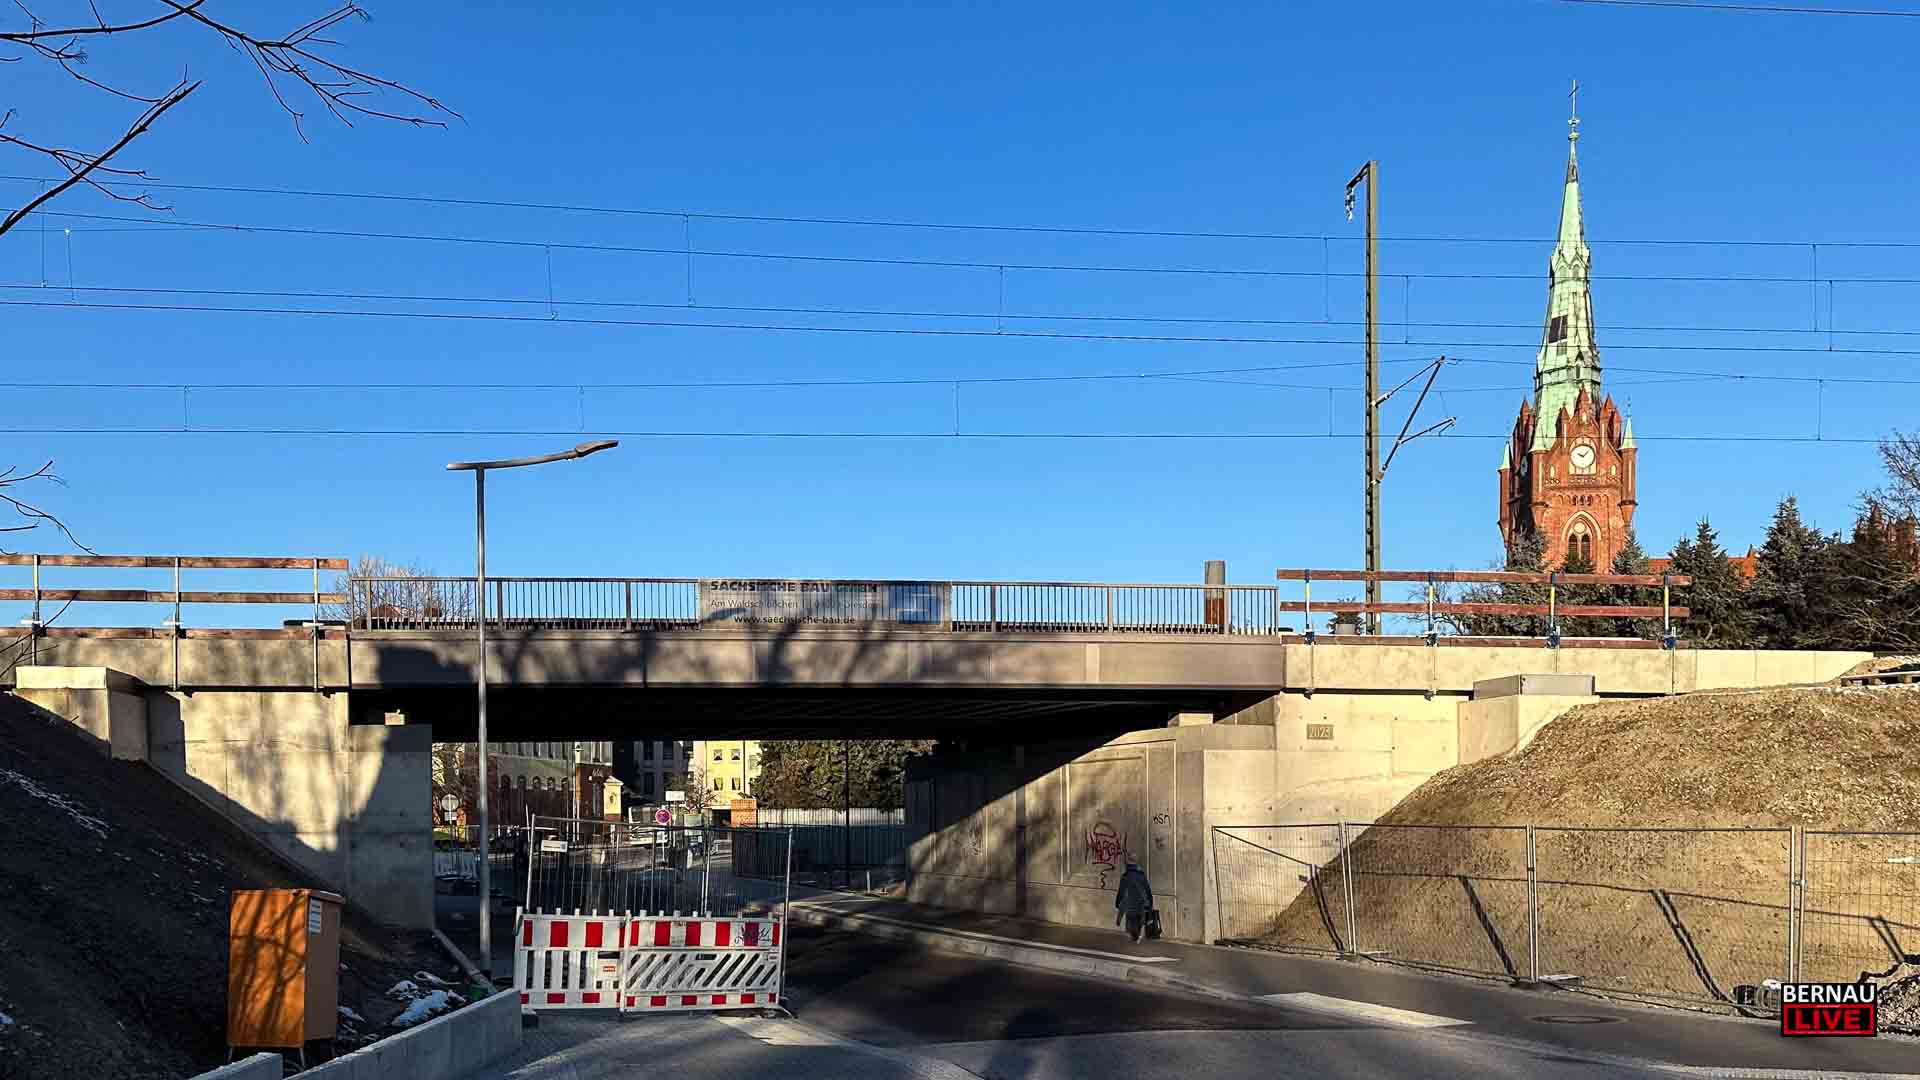 Bernau: Einschränkungen durch Brückenbauarbeiten an der Börnicker Chaussee